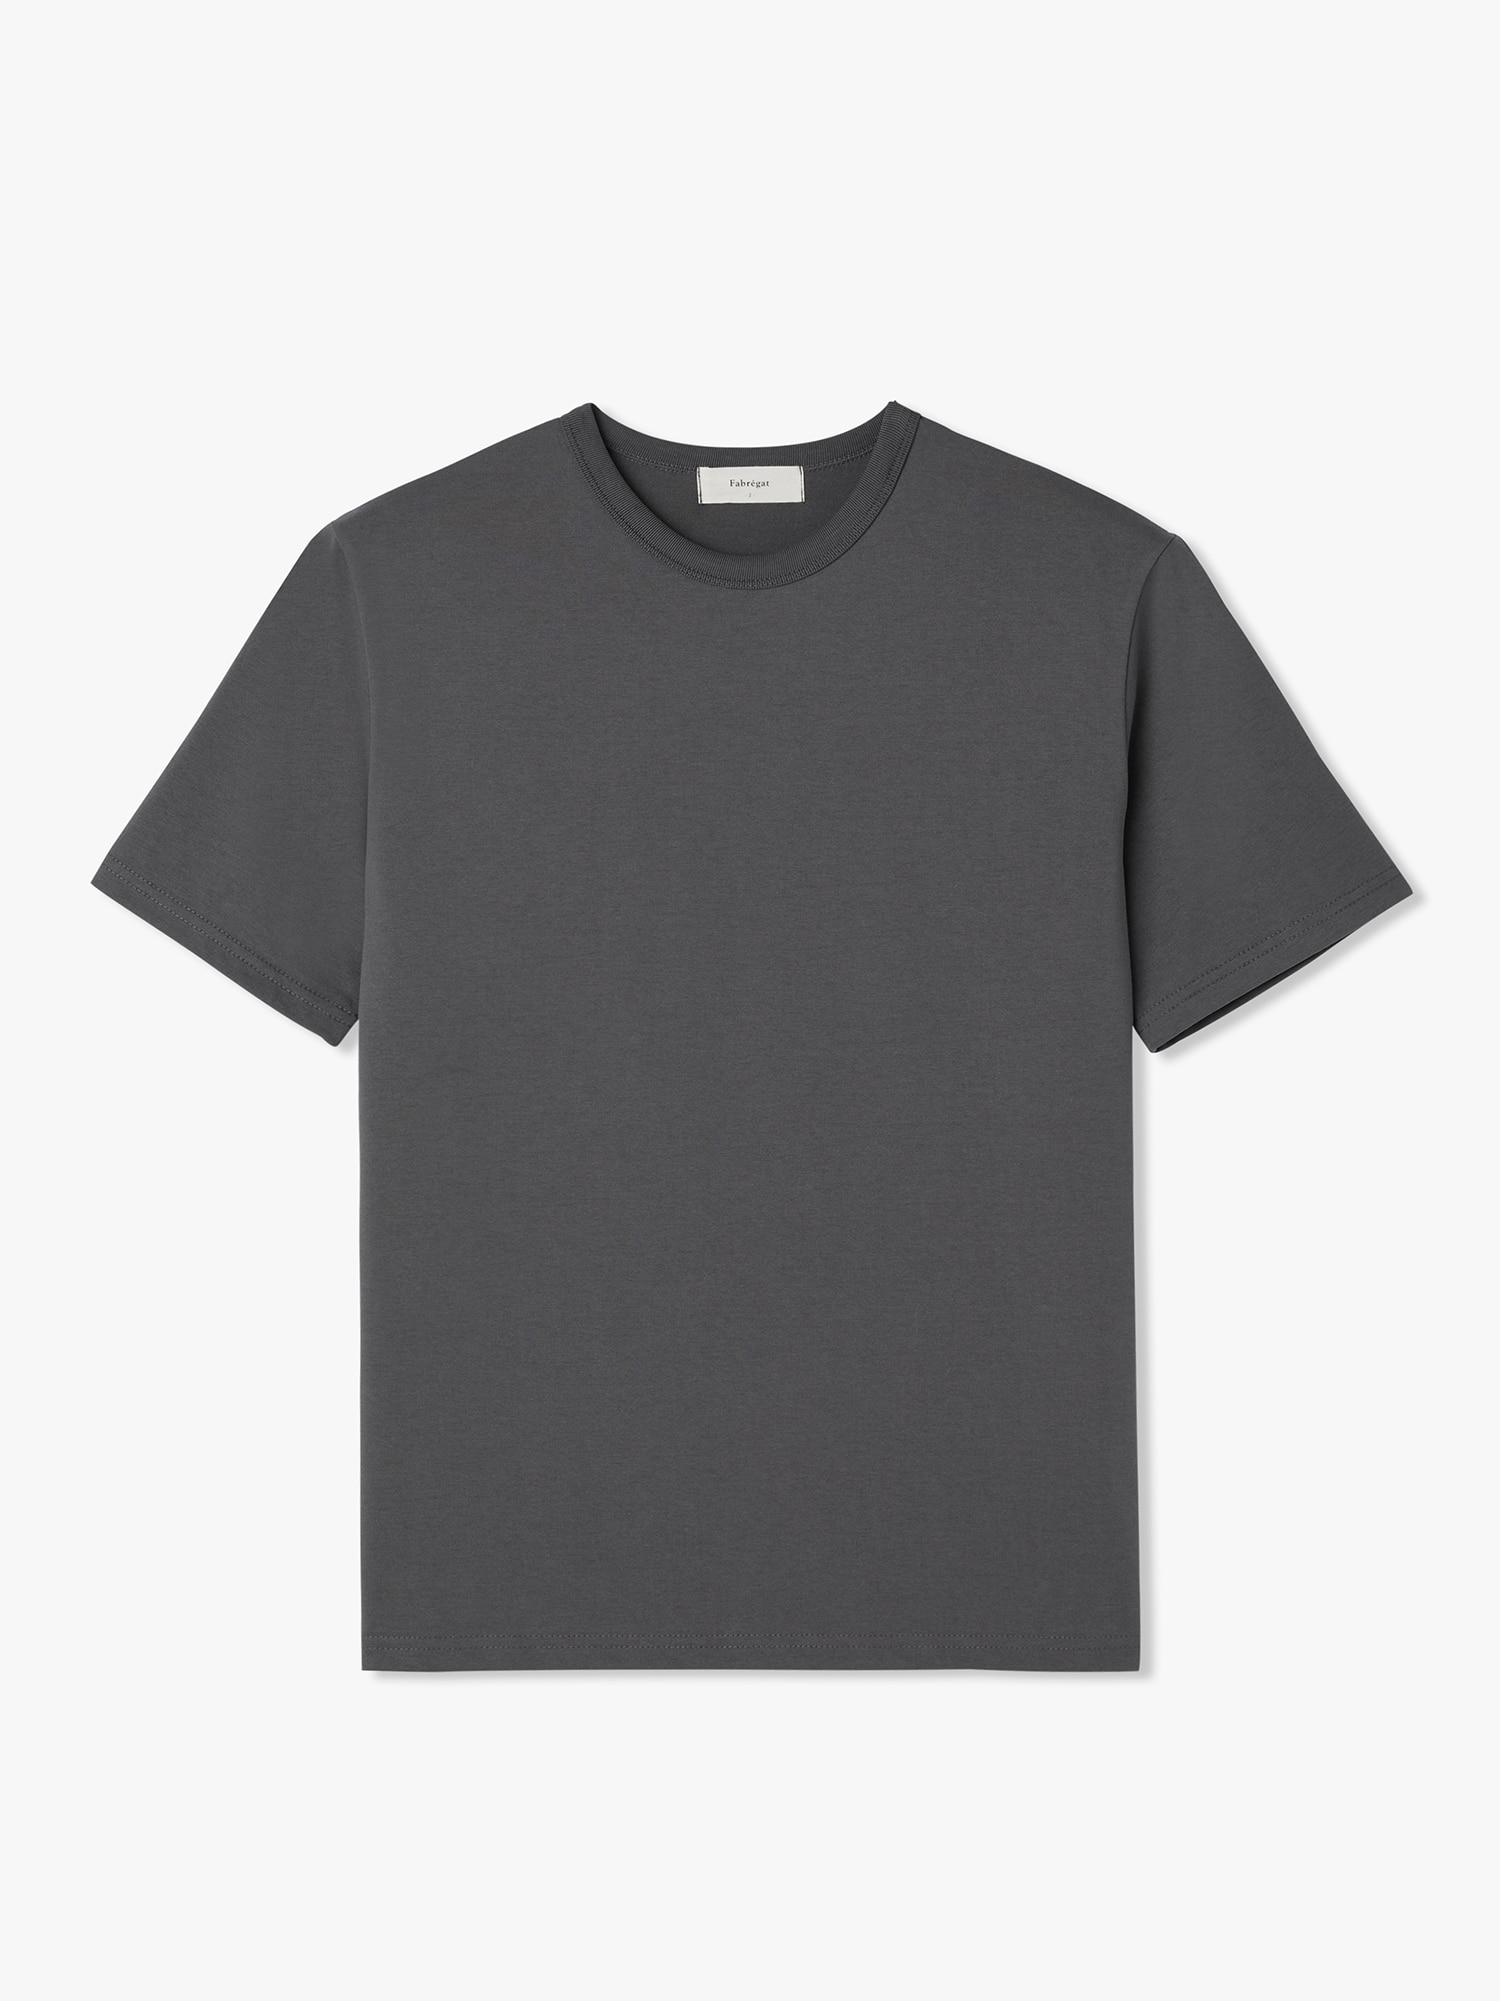 Refresh Fine Cotton T-Shirts (Charcoal)